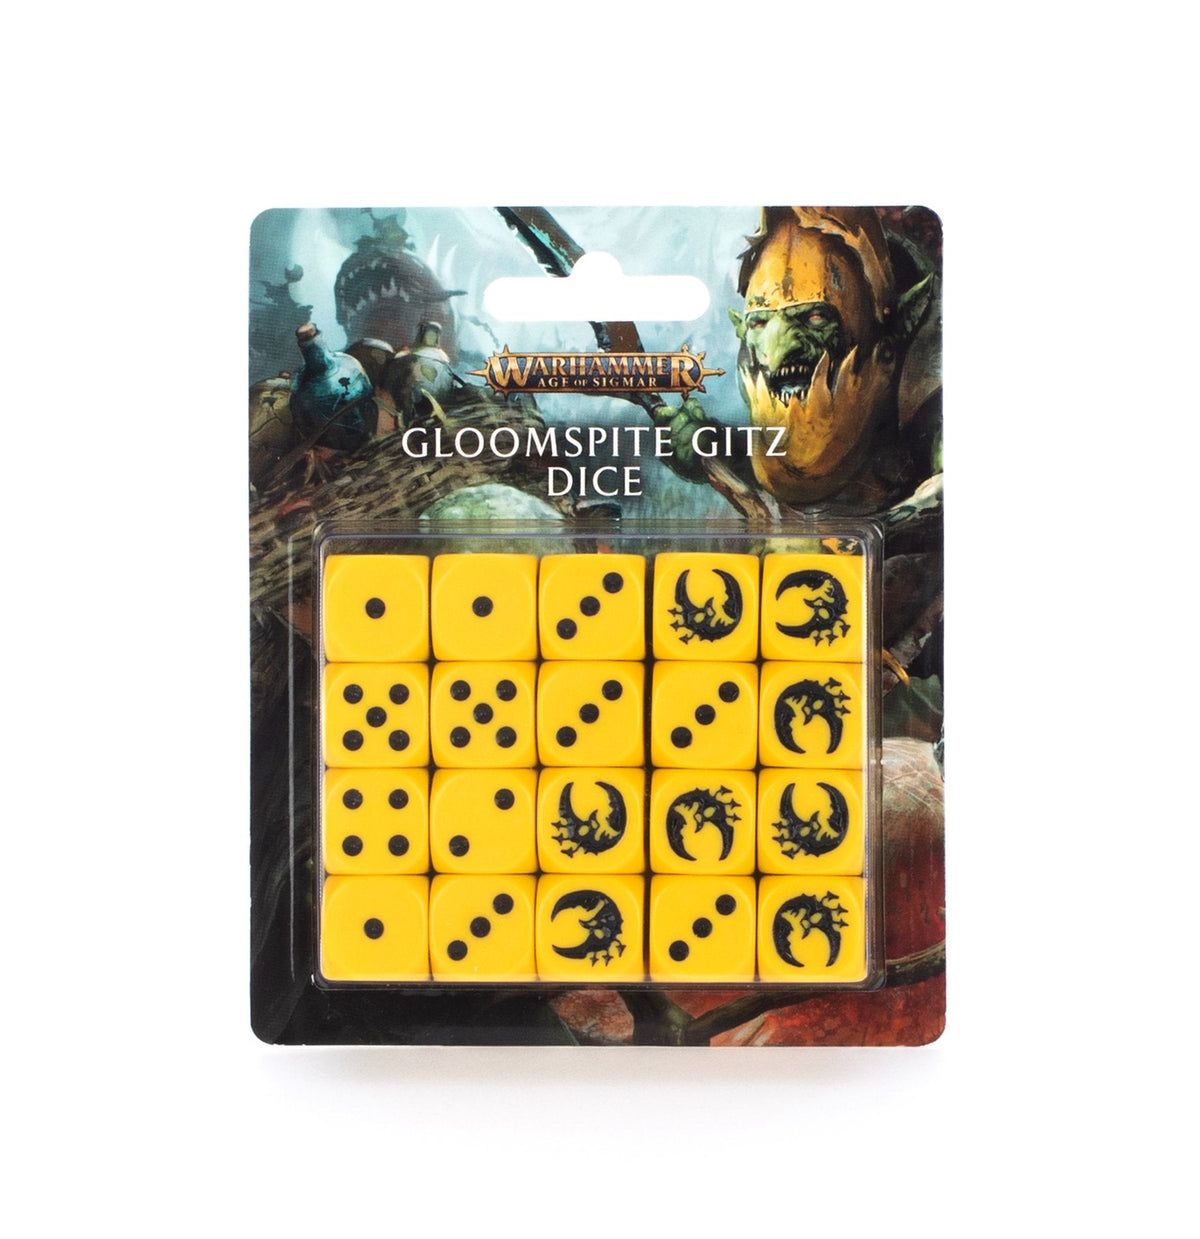 Gloomspite Gitz Dice (Warhammer Age of Sigmar)